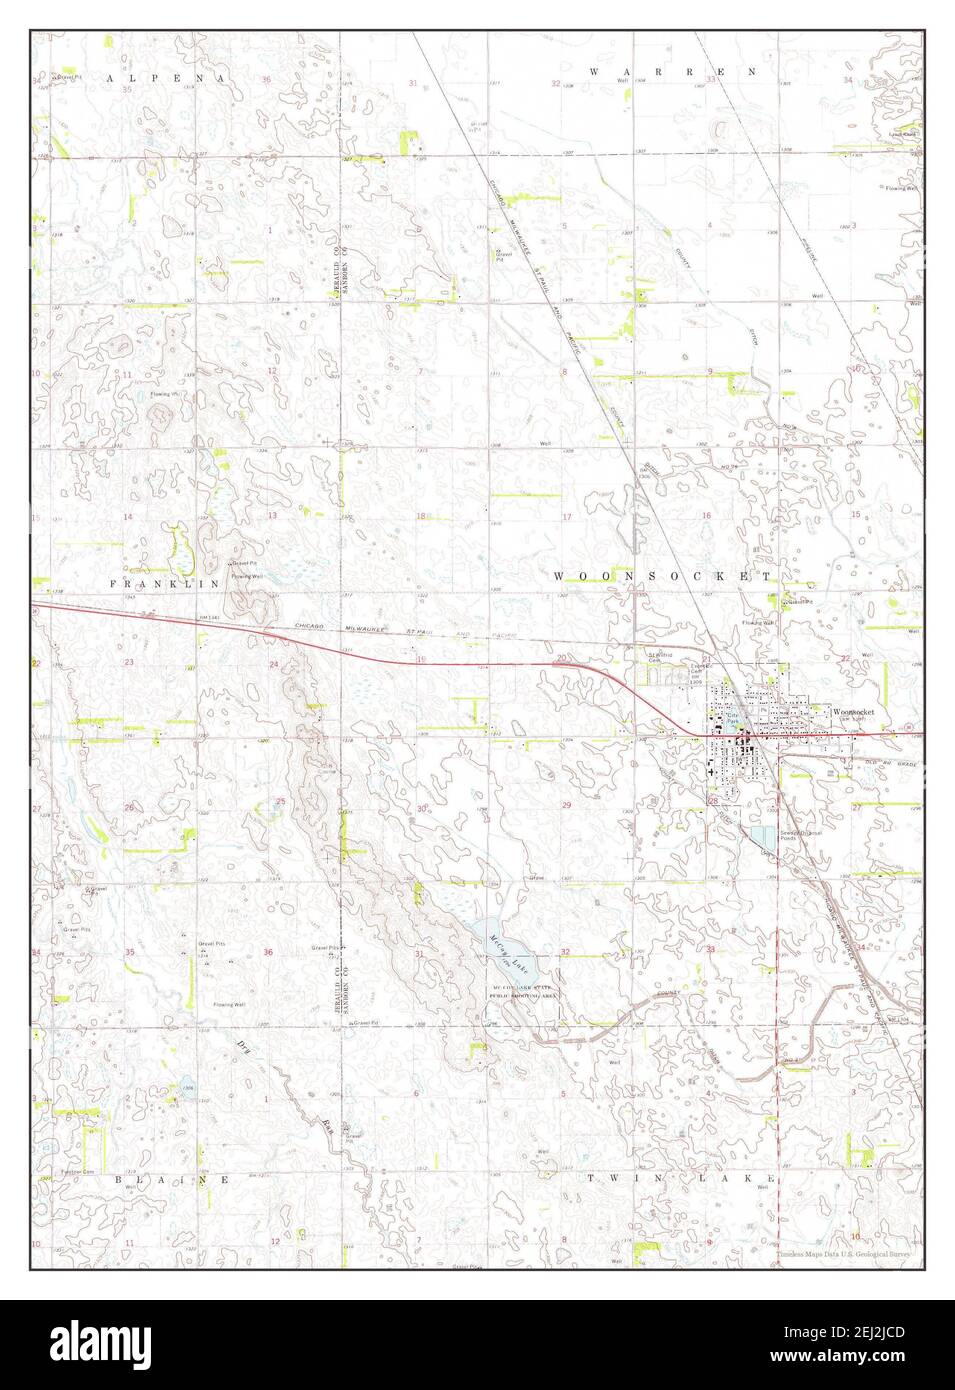 Woonsocket, South Dakota, map 1973, 1:24000, United States of America by Timeless Maps, data U.S. Geological Survey Stock Photo